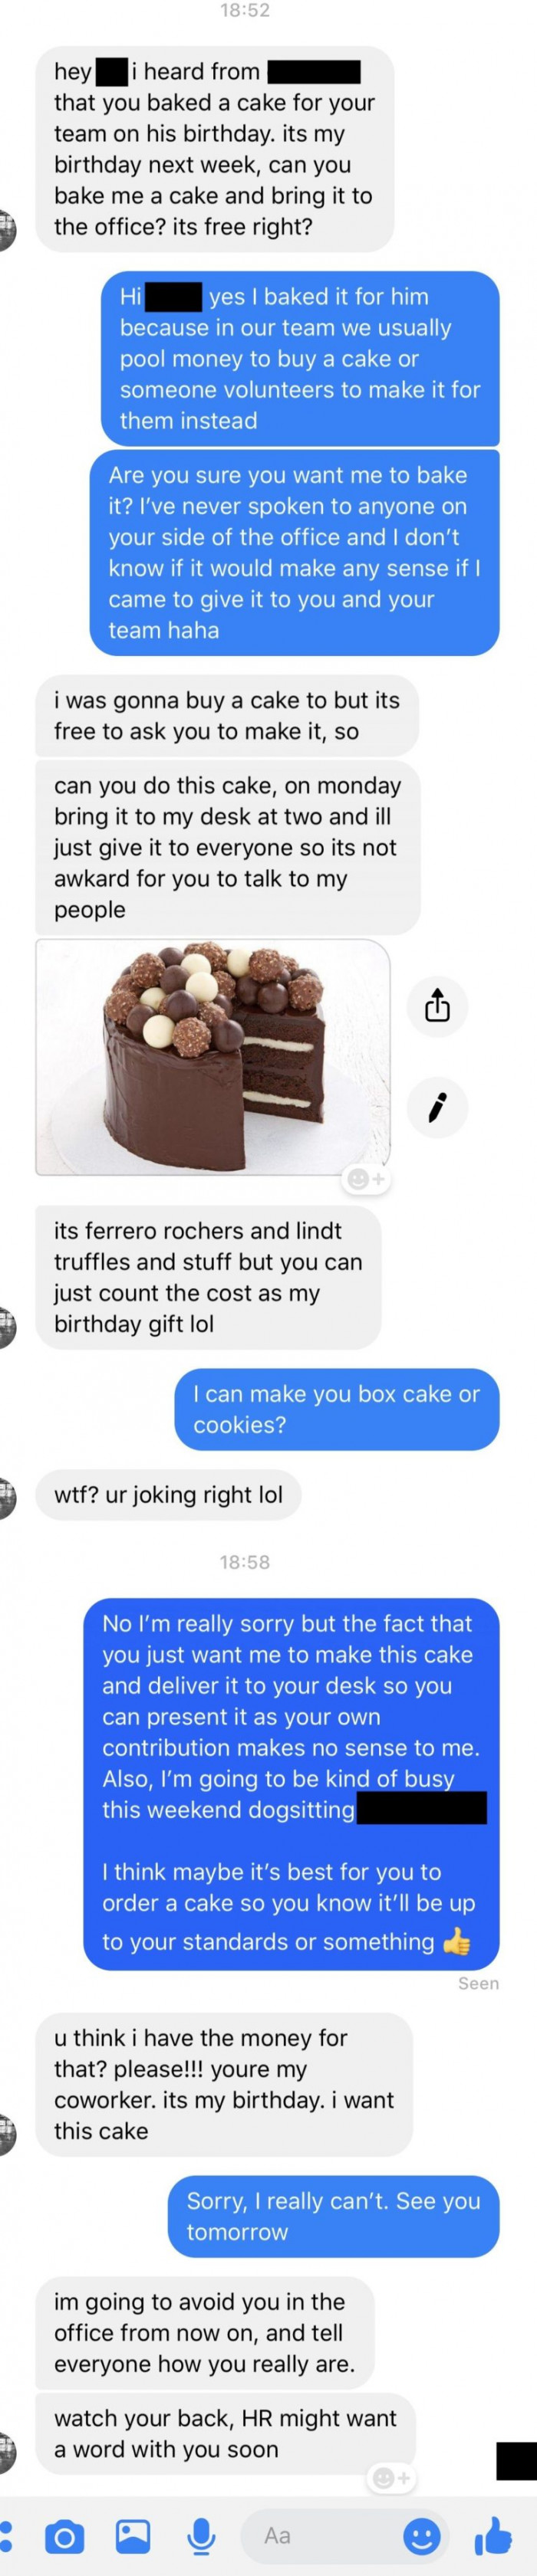 1. A free cake?